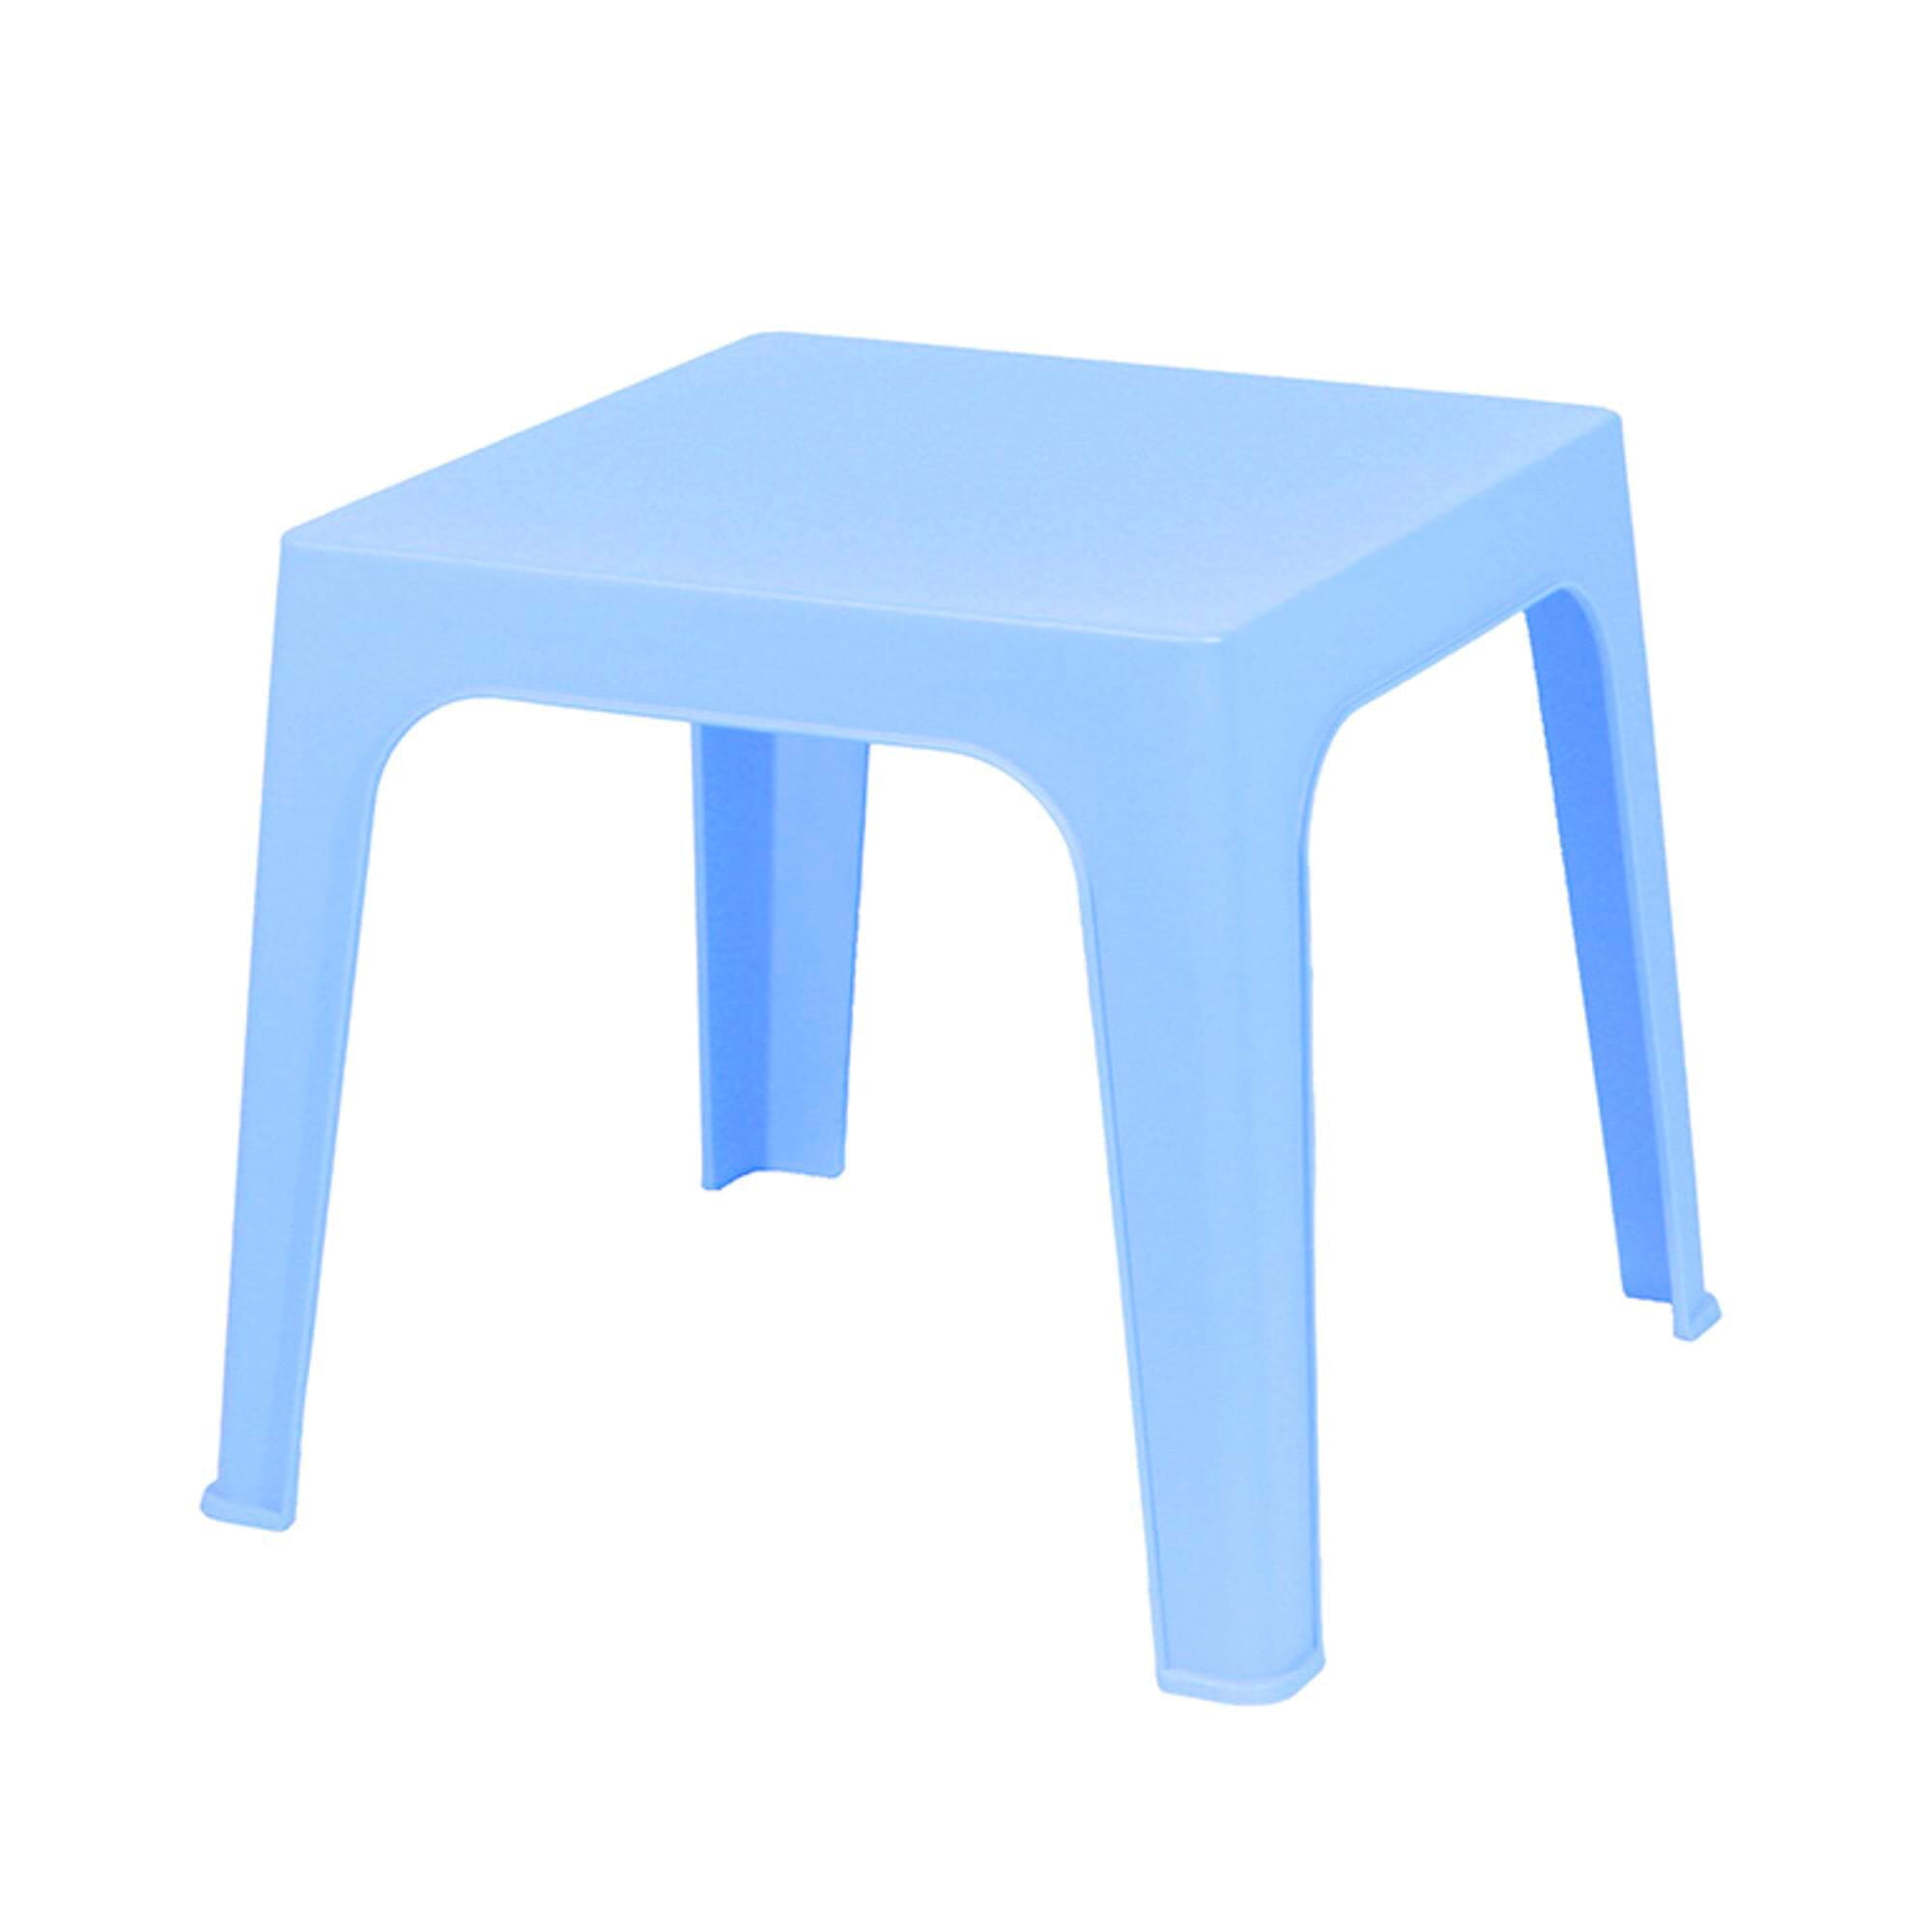 Garbar julieta kindertafel 50x50 hemelsblauw